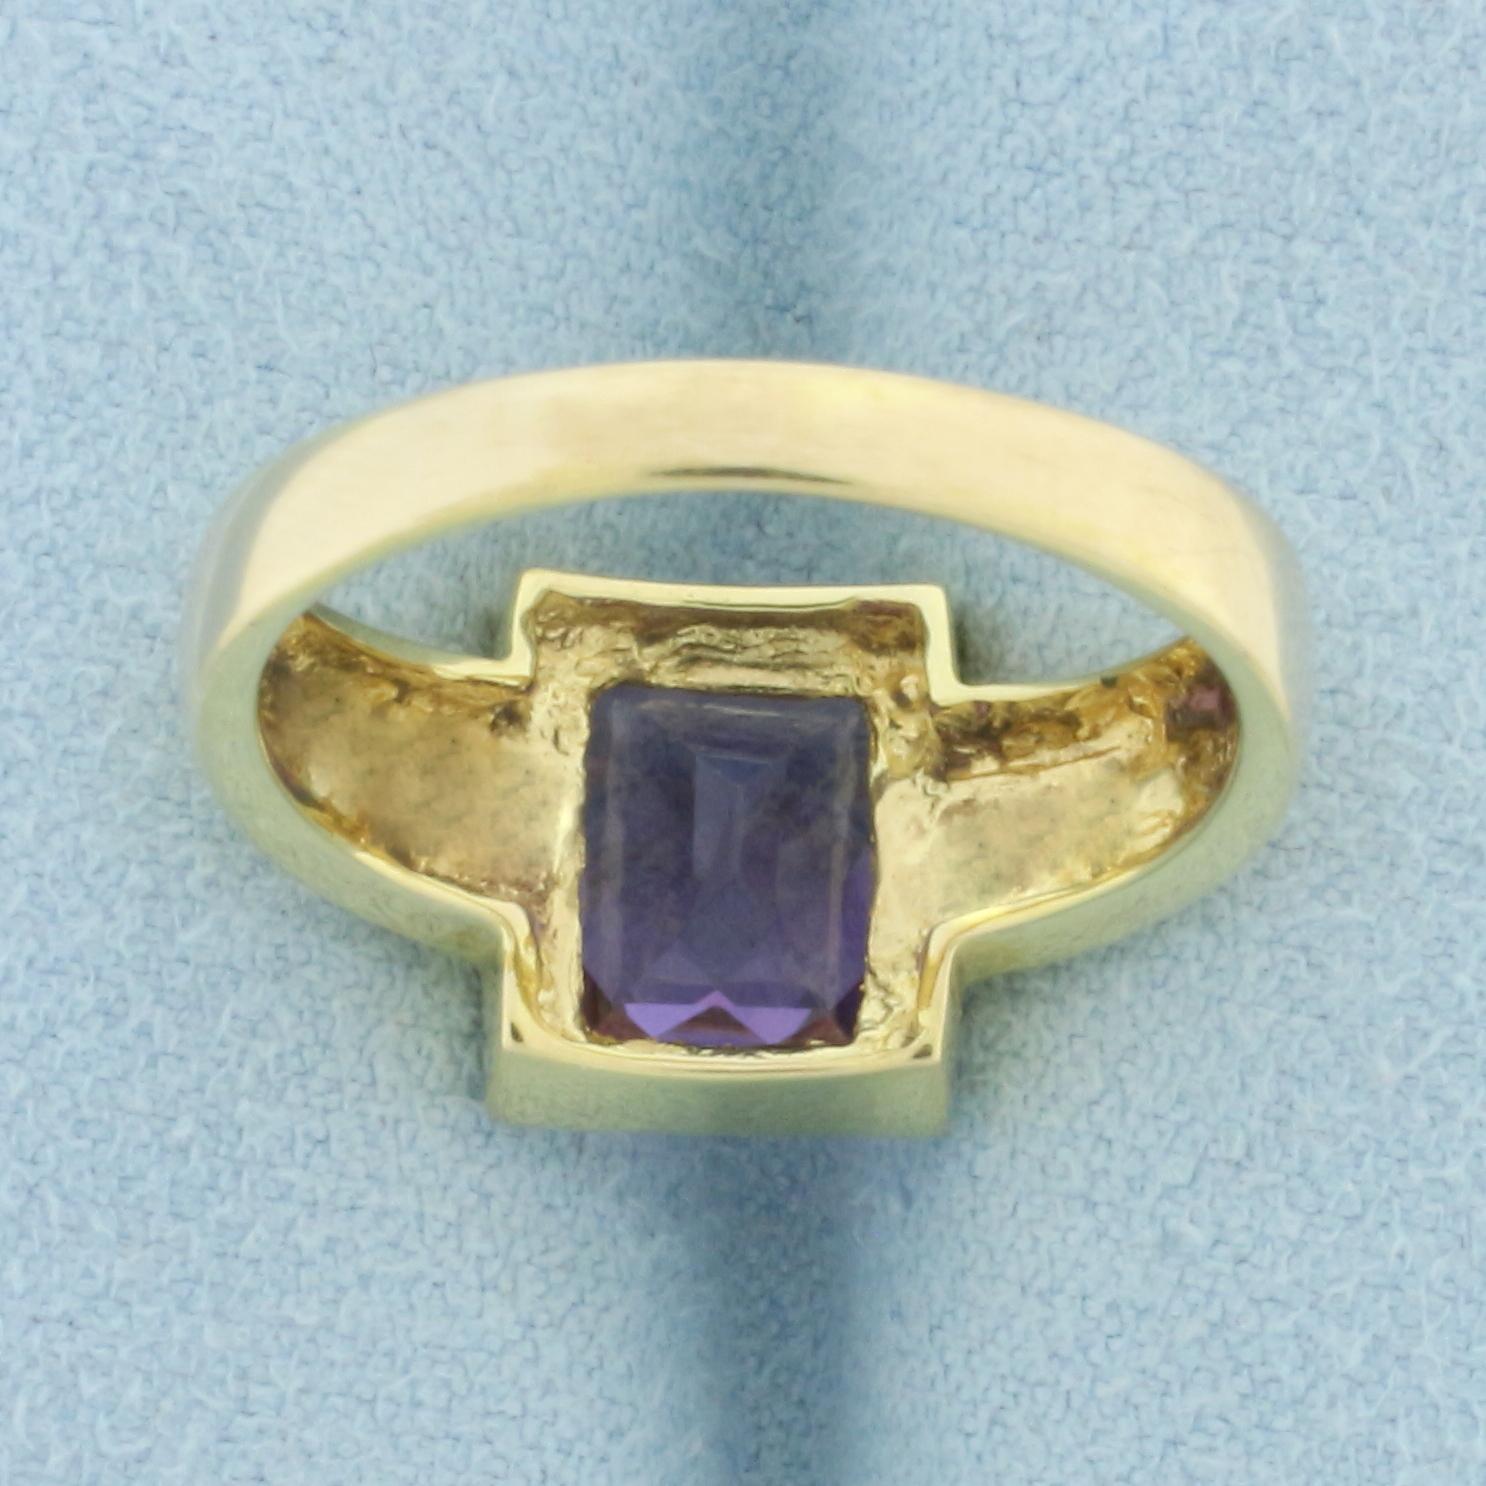 Bezel Set Amethyst And Diamond Ring In 14k Yellow Gold